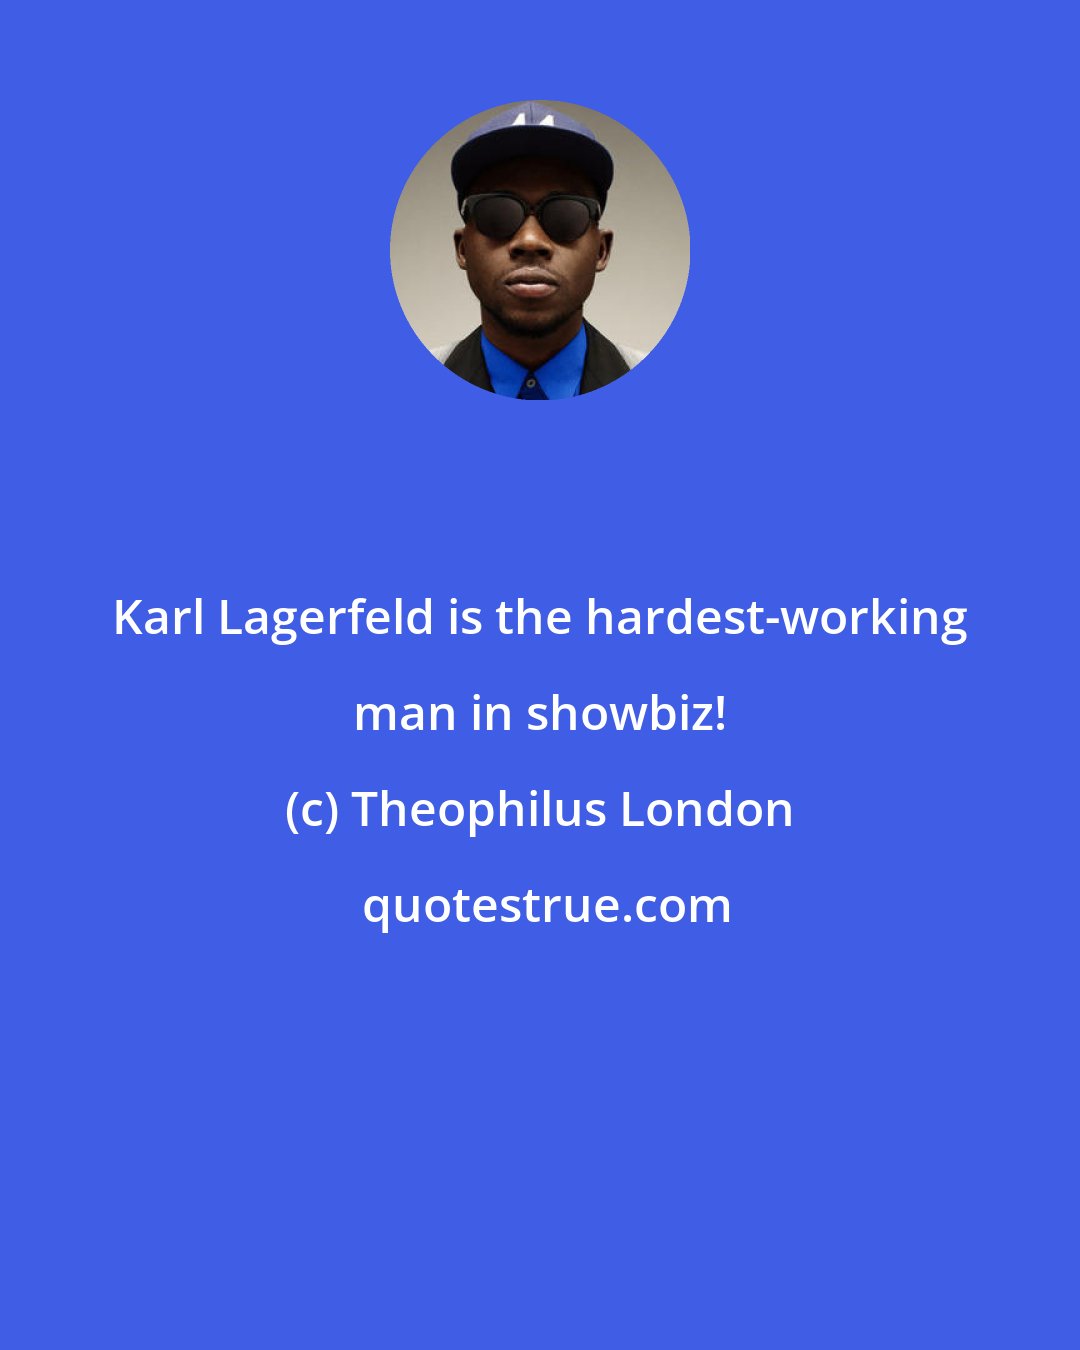 Theophilus London: Karl Lagerfeld is the hardest-working man in showbiz!